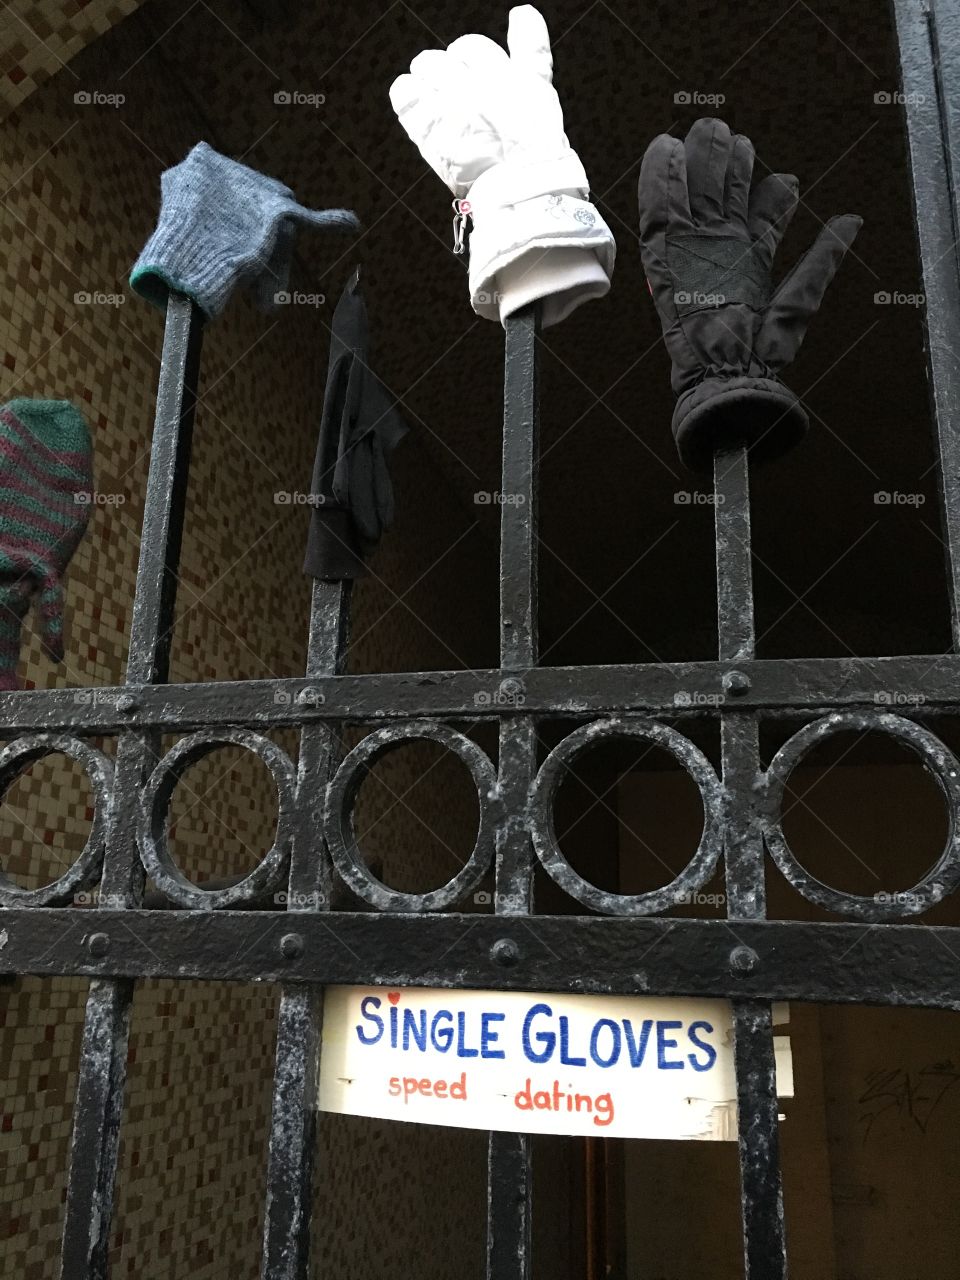 Single gloves dating